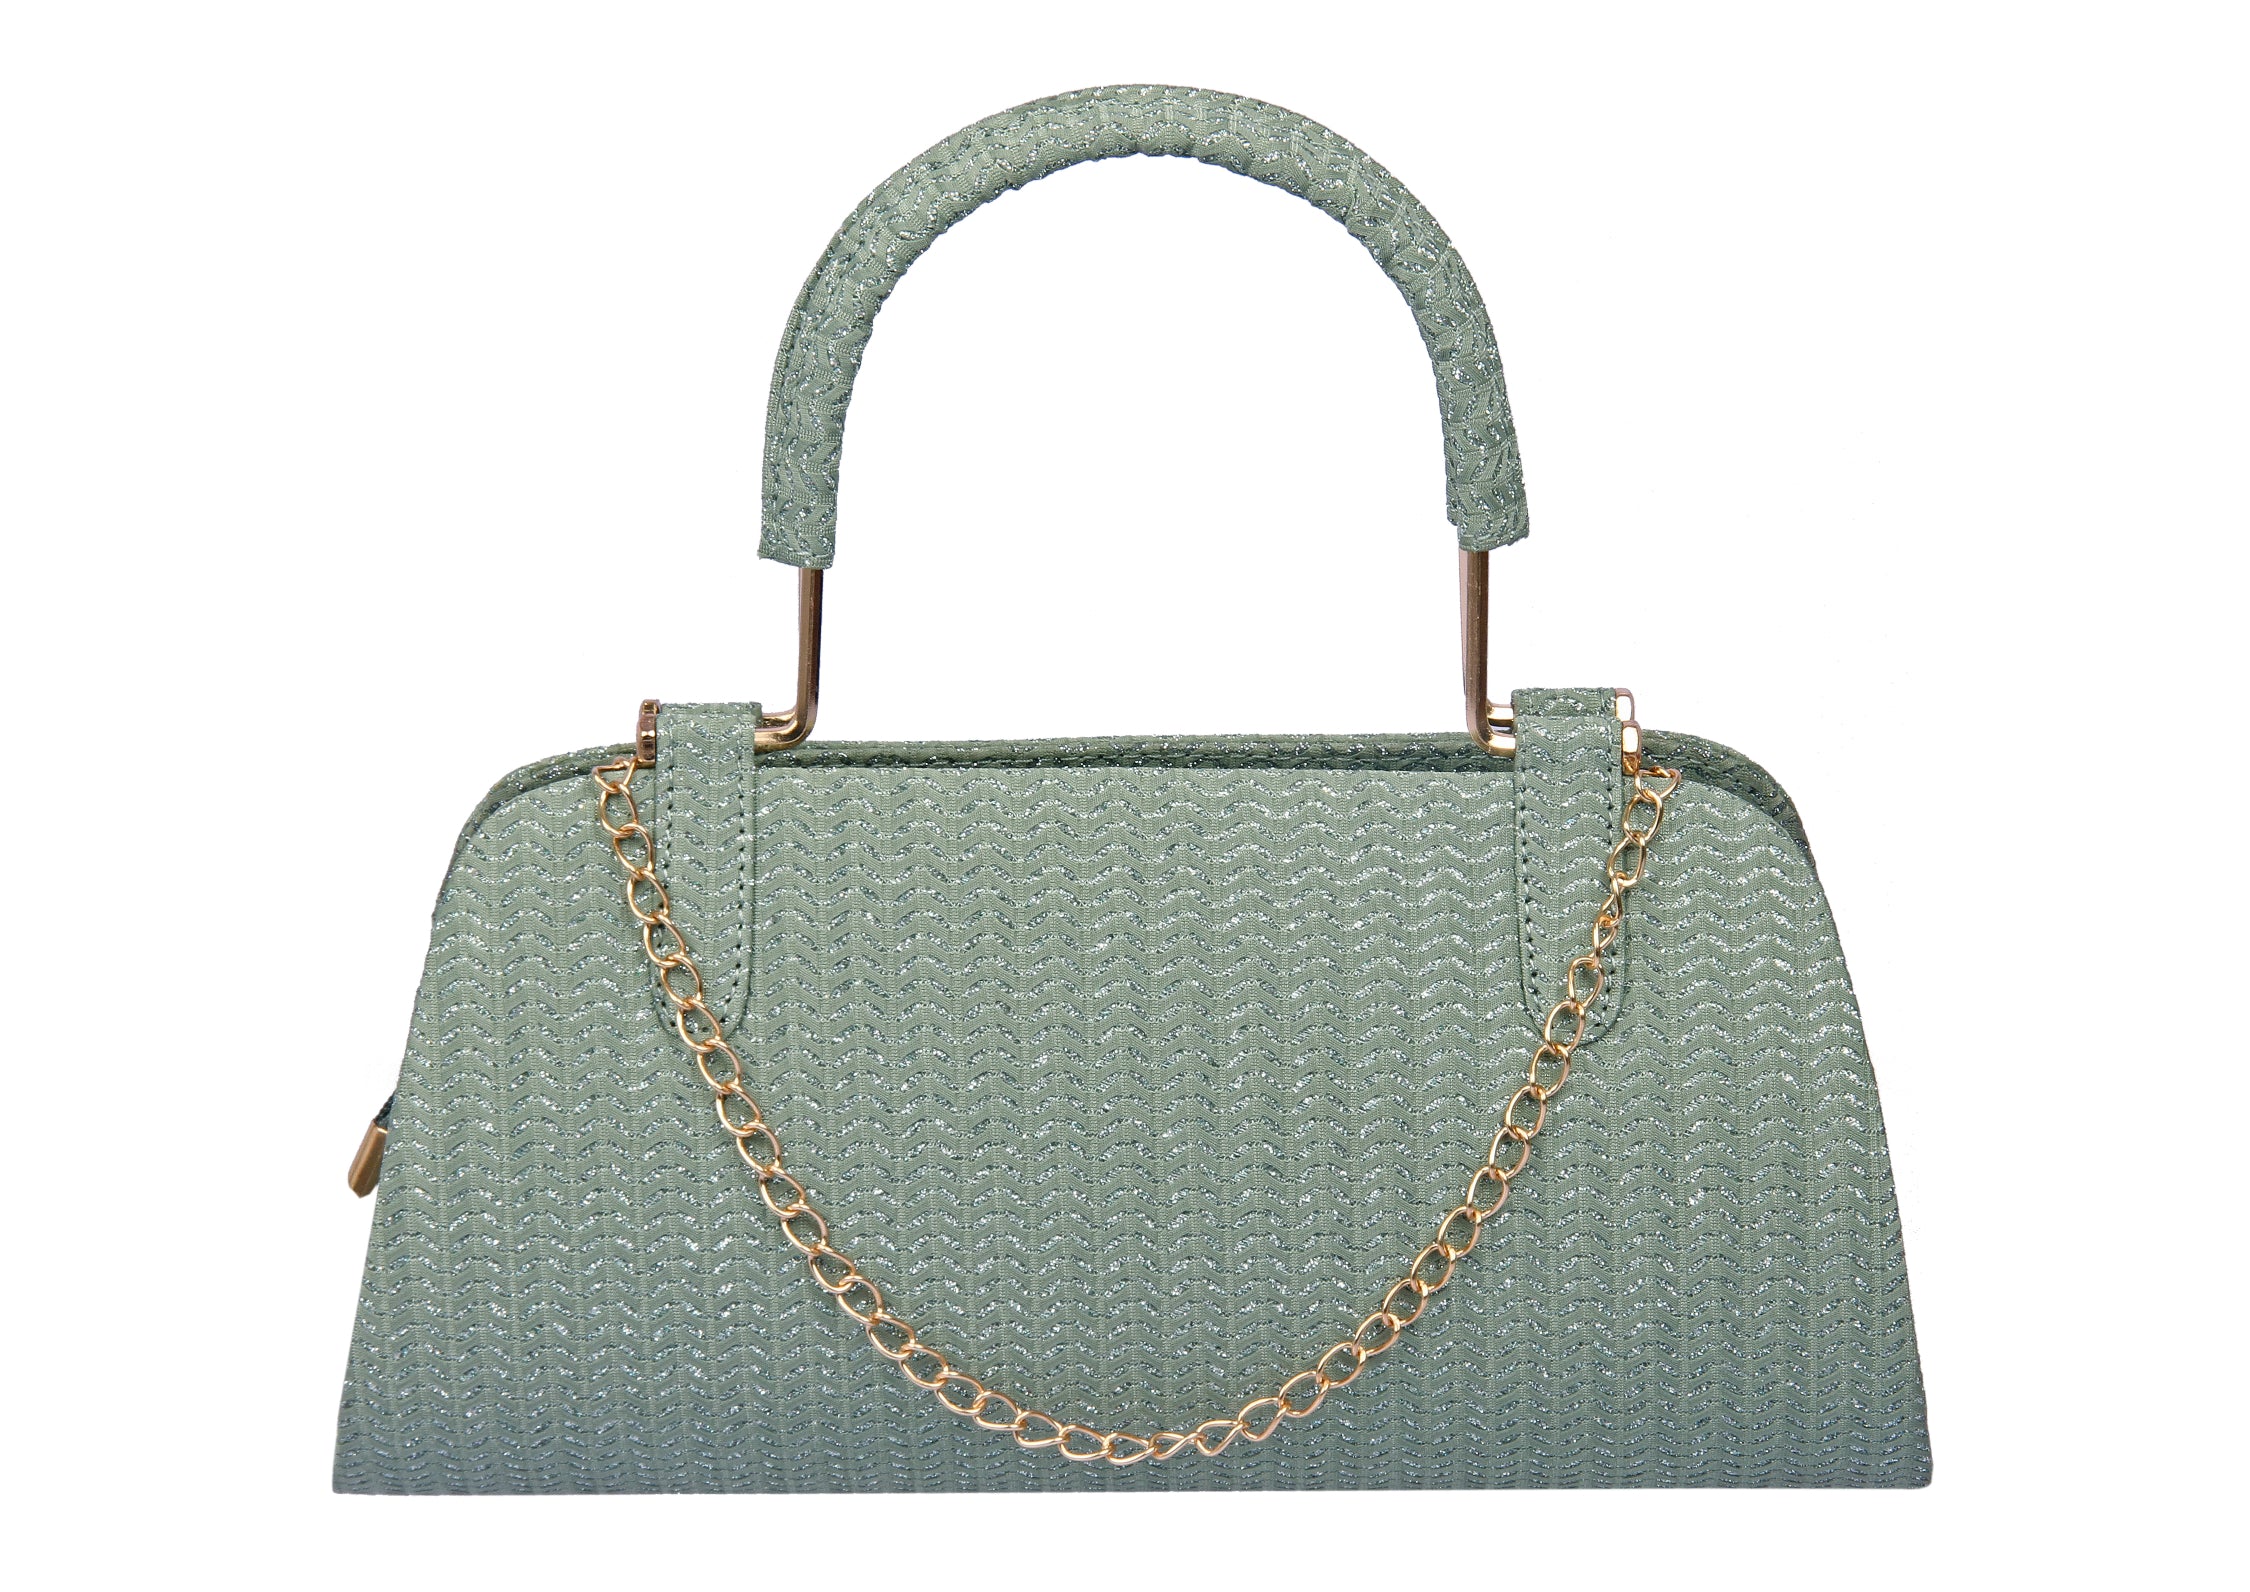 Return Gift-Fancy Hand Bag /Sling Bag type | Shaabee Return Gifts